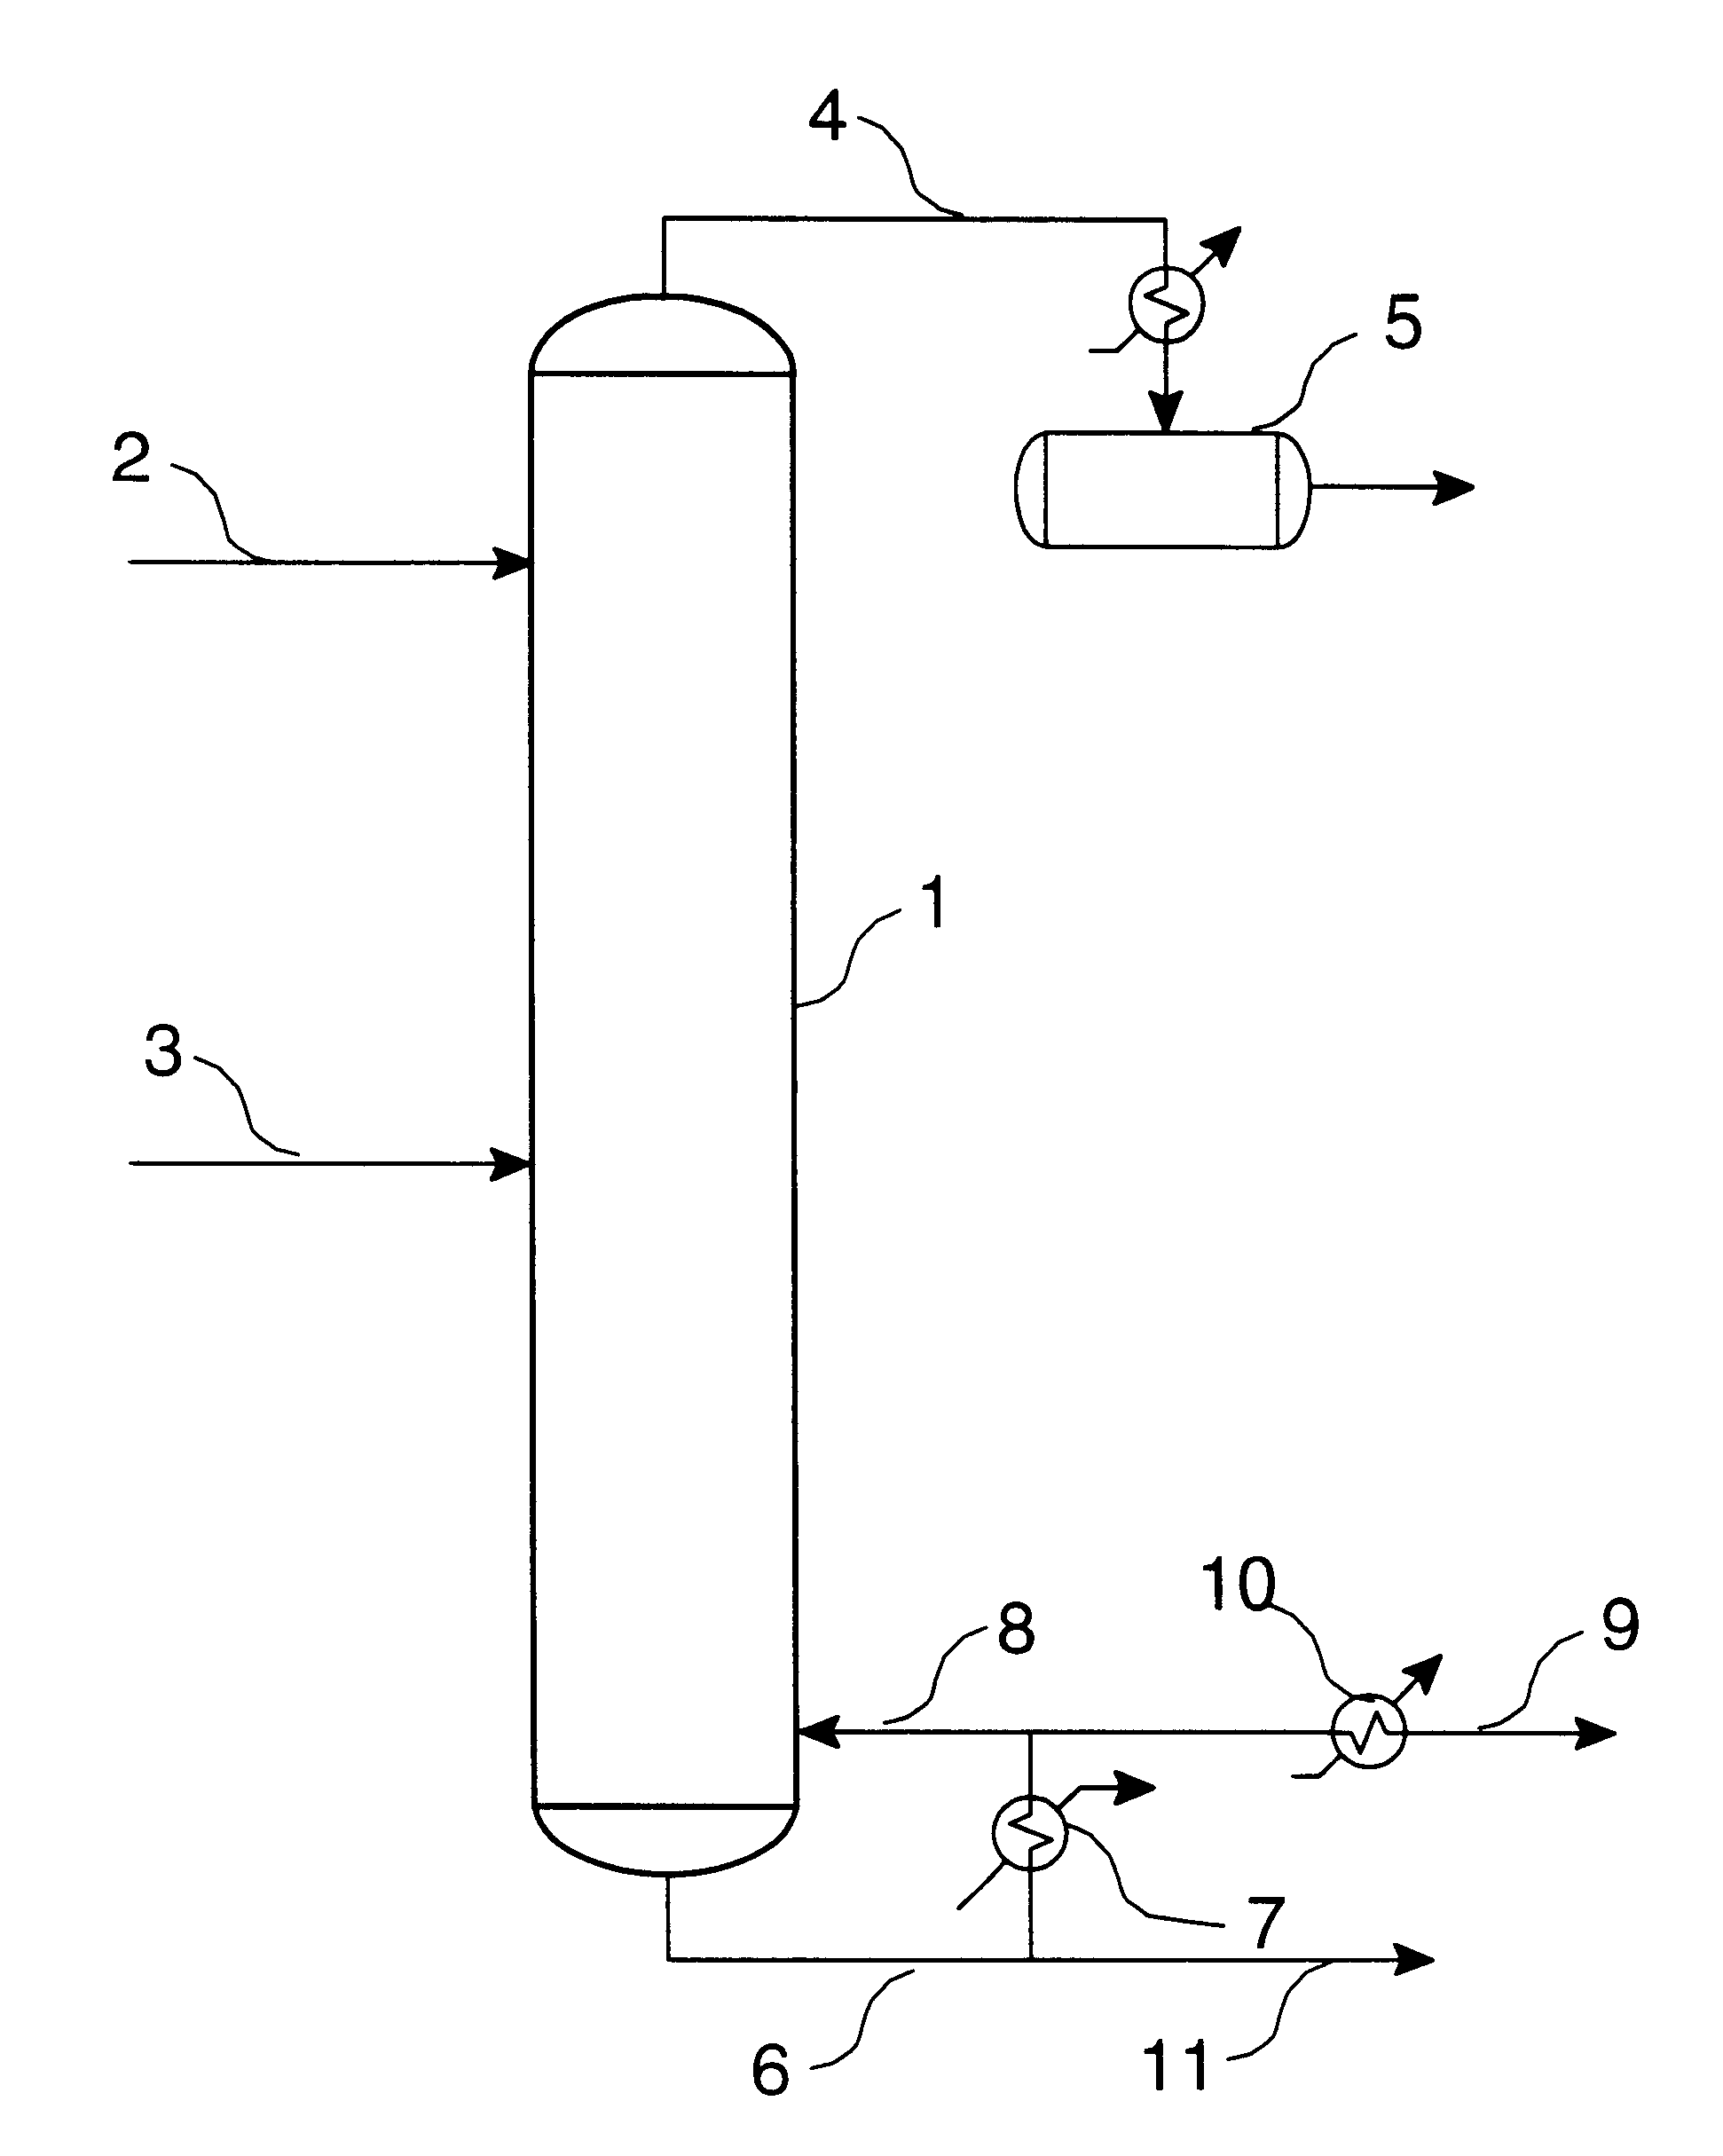 Impurities separation by distillation